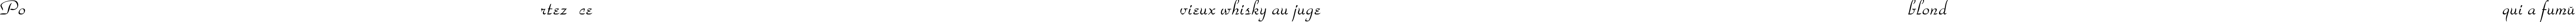 Пример написания шрифтом ParkAvenue-Normal текста на французском